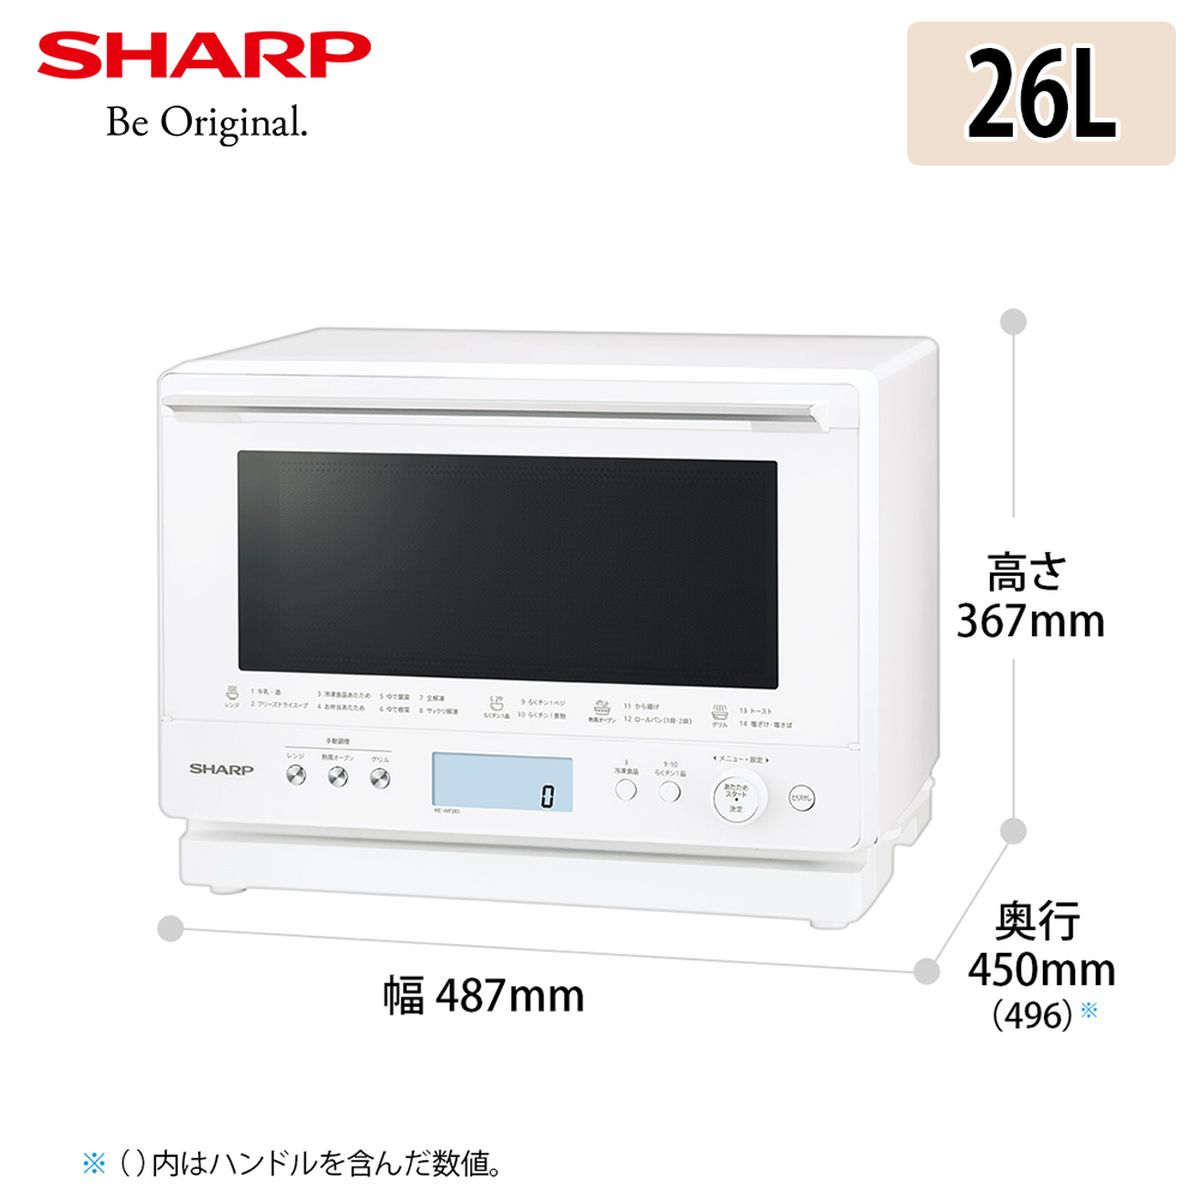 SHARP 電子レンジ オーブンレンジ - 電子レンジ/オーブン